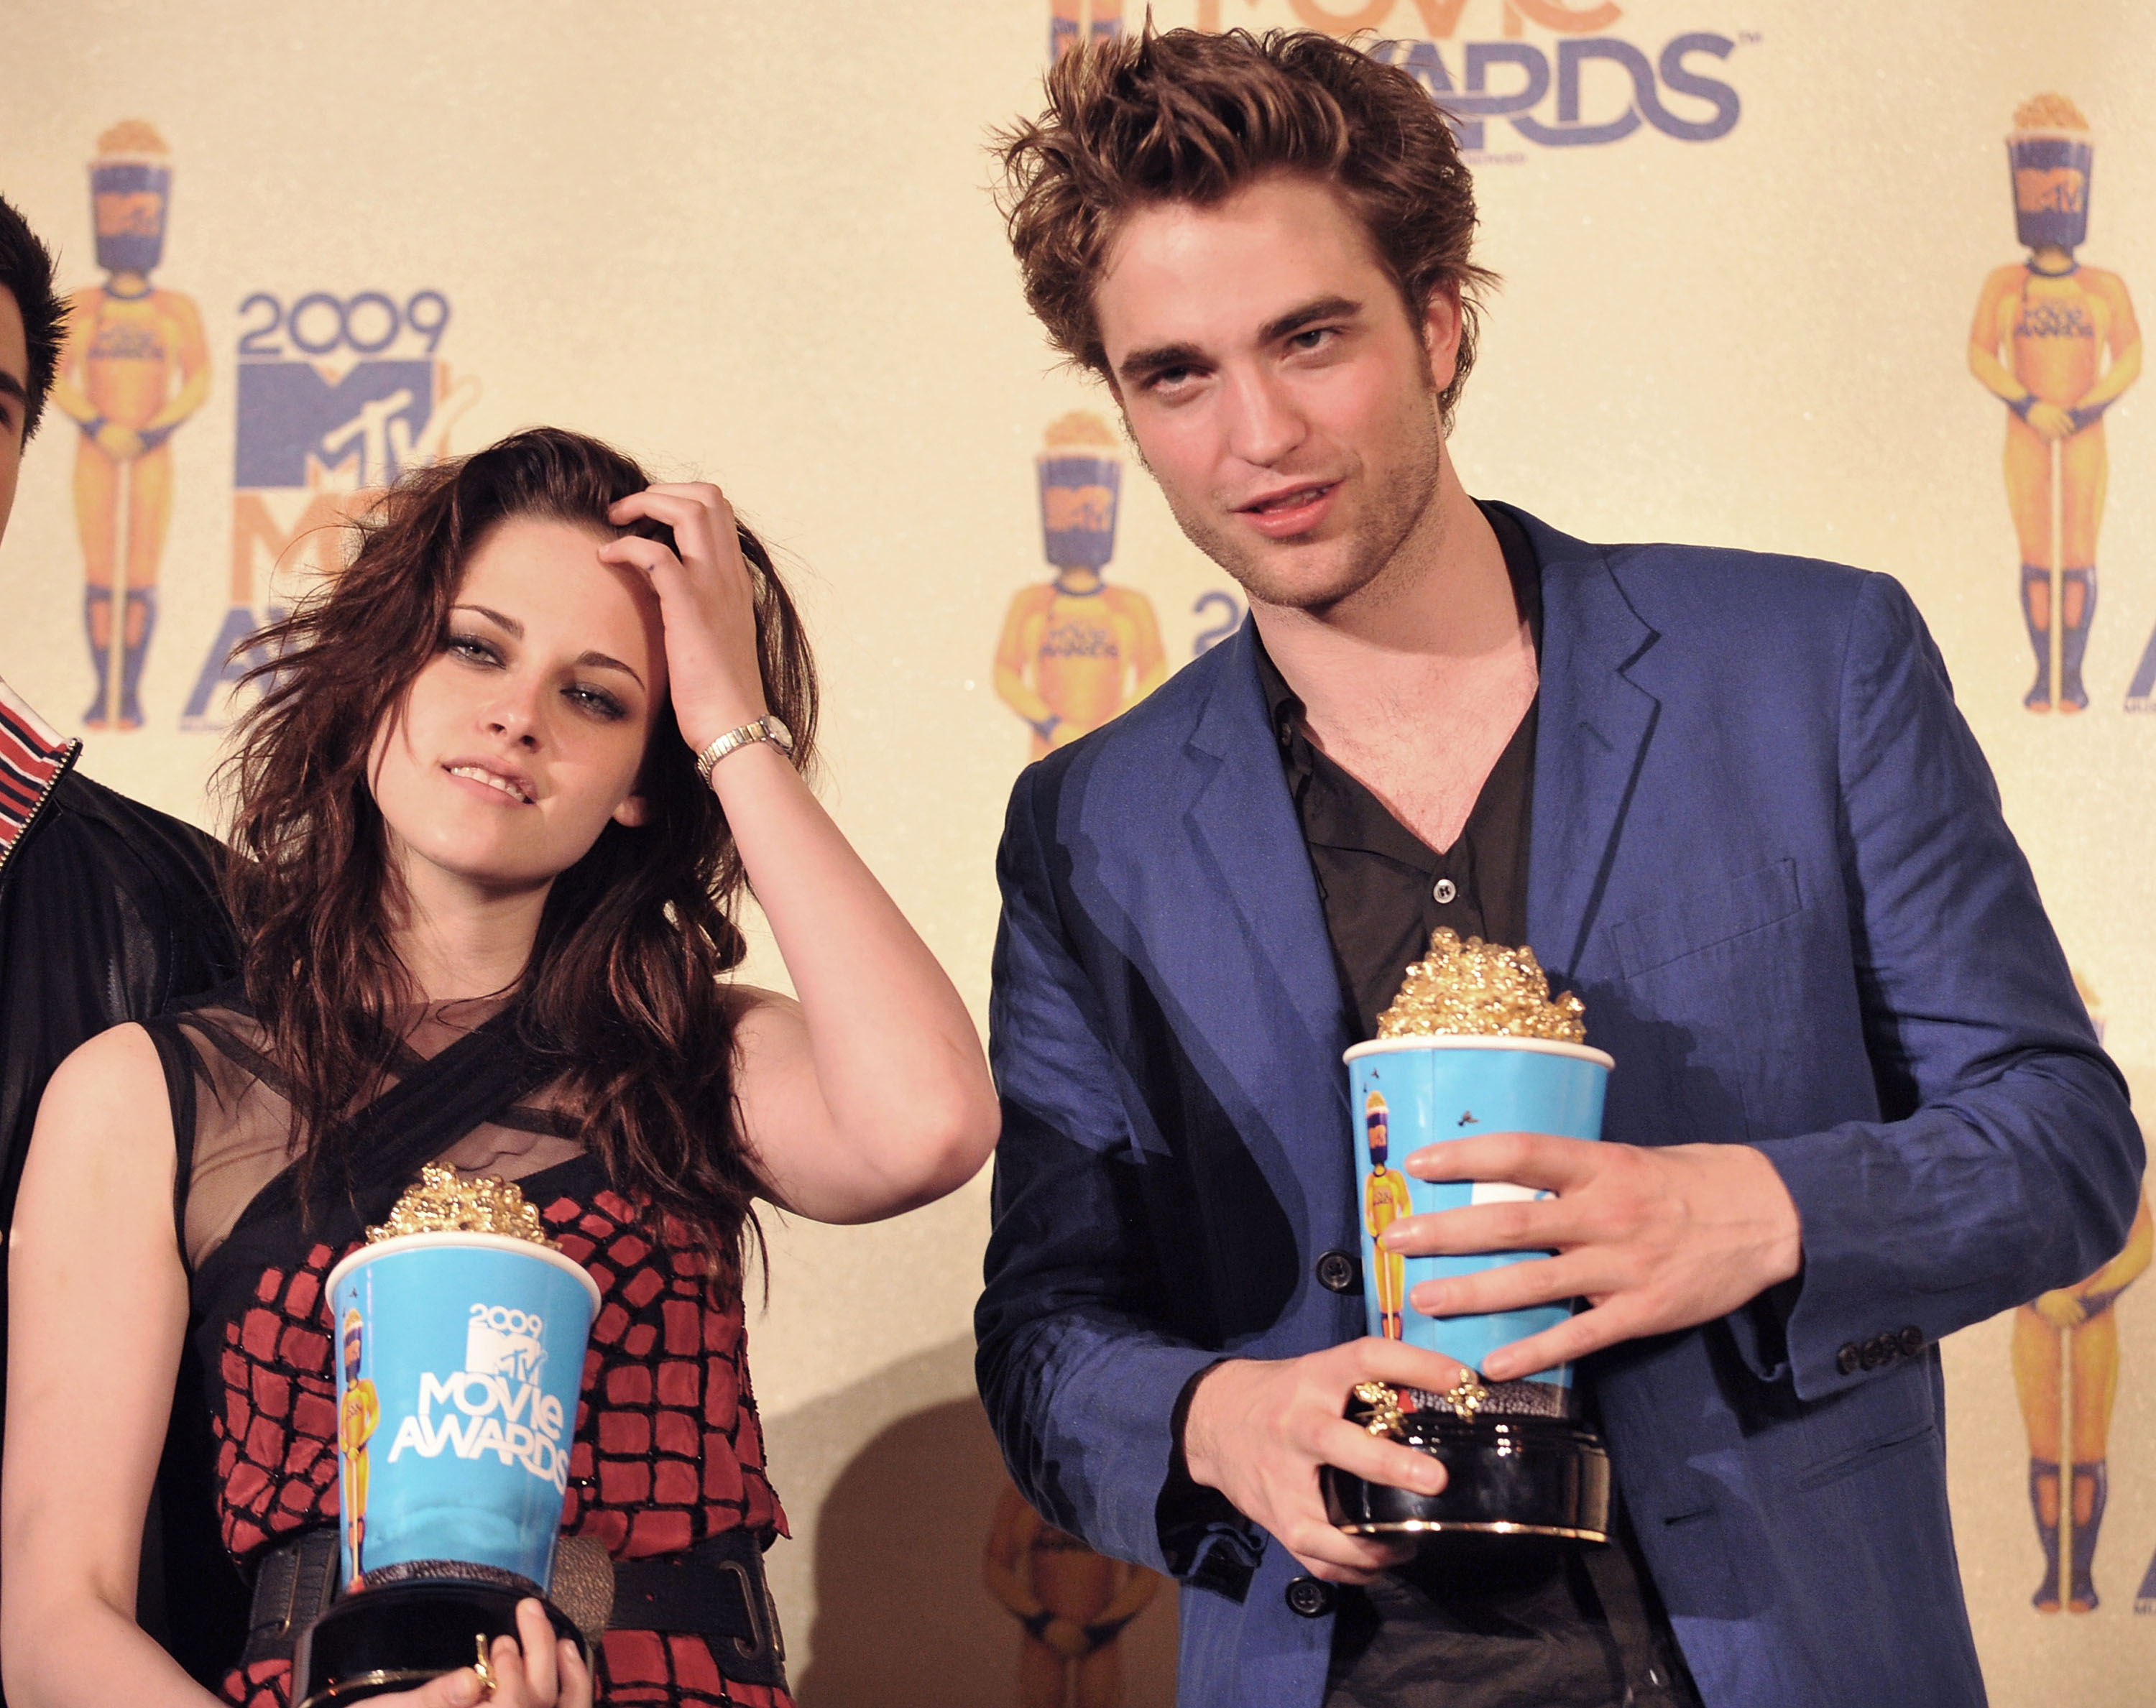 Kristen Stewart and Robert Pattinson posing with popcorn shaped awards